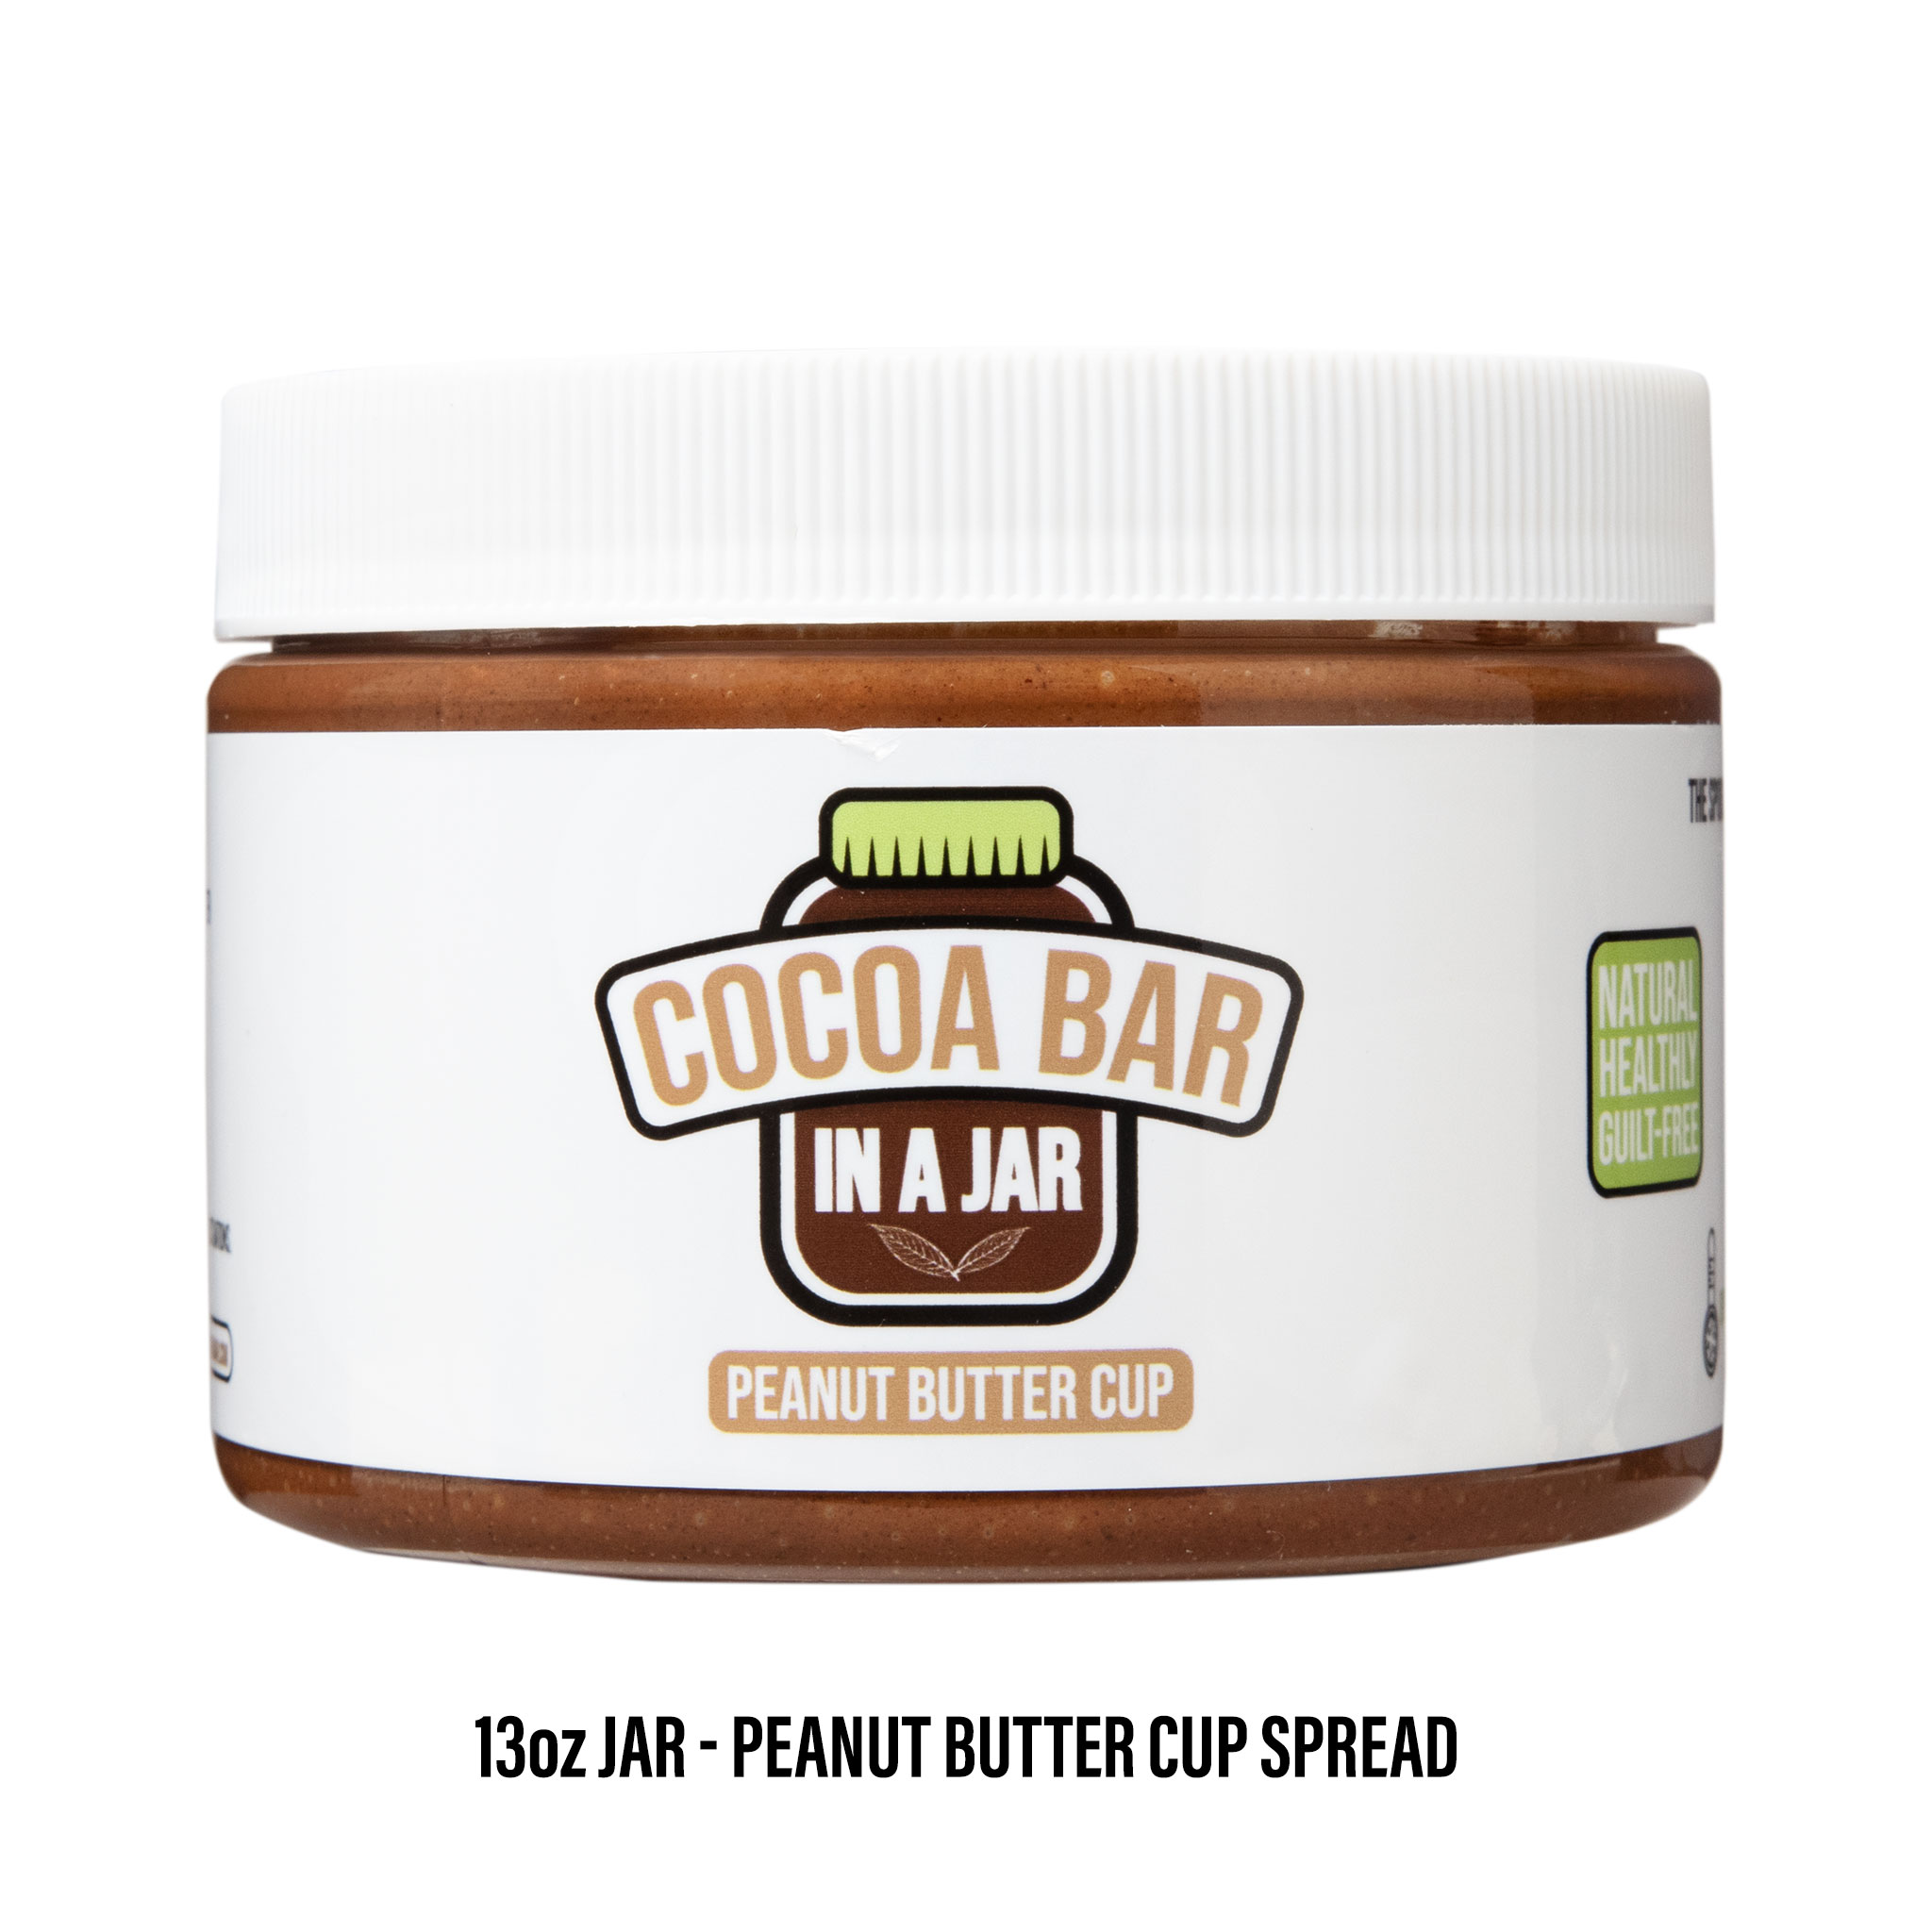 Peanut Butter Cup Spread Cocoa Bar in a Jar